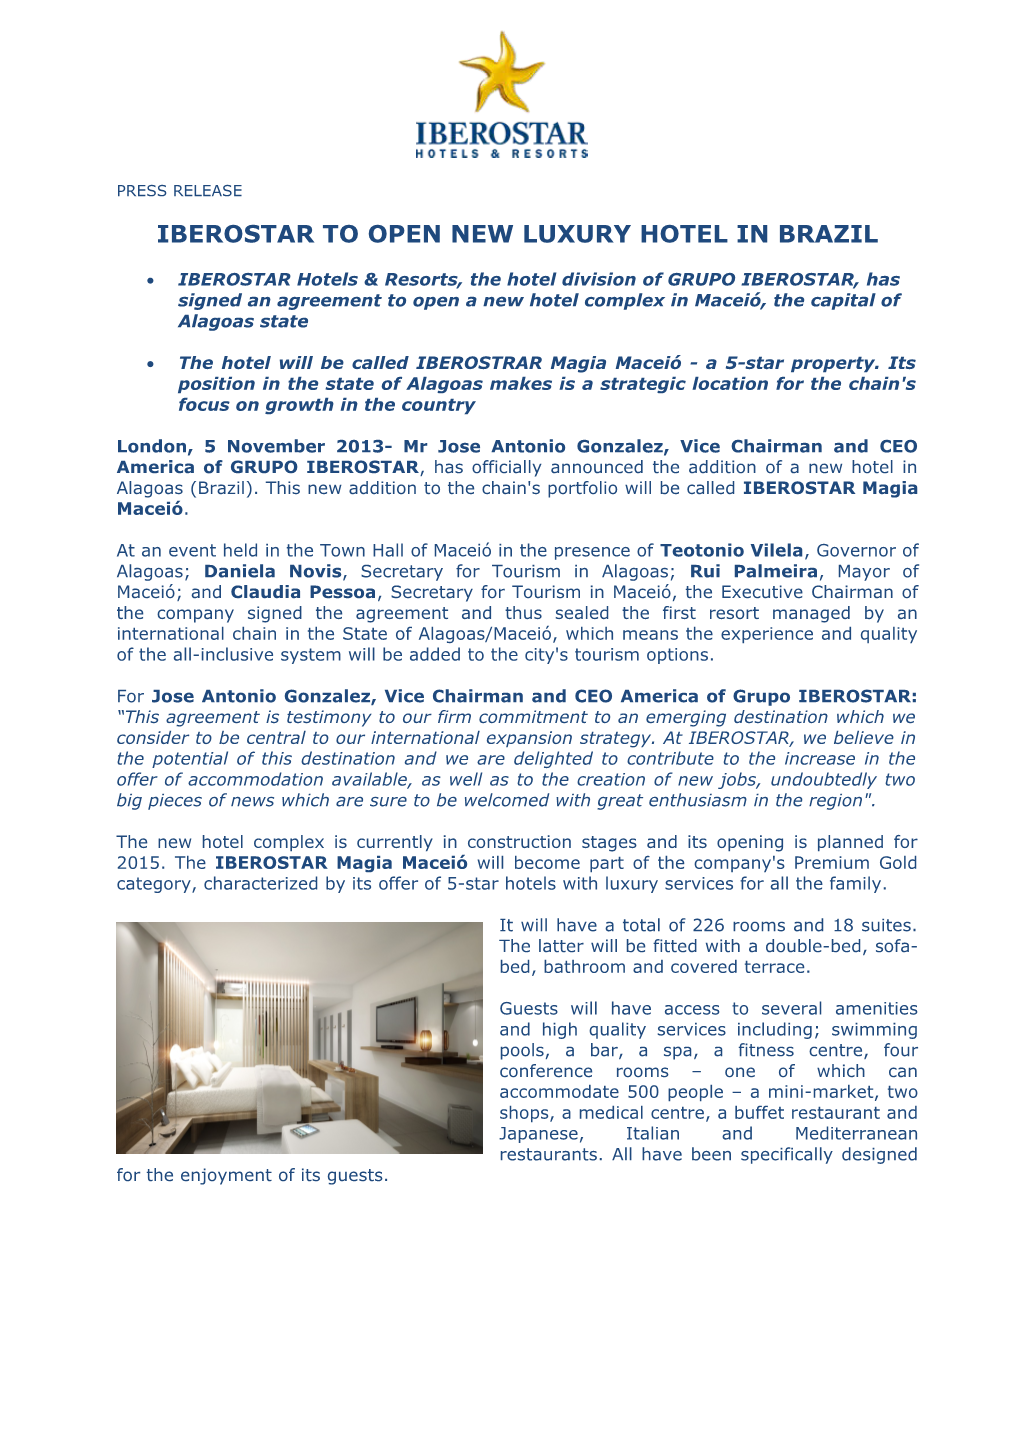 Iberostar to Open New Luxury Hotel in Brazil